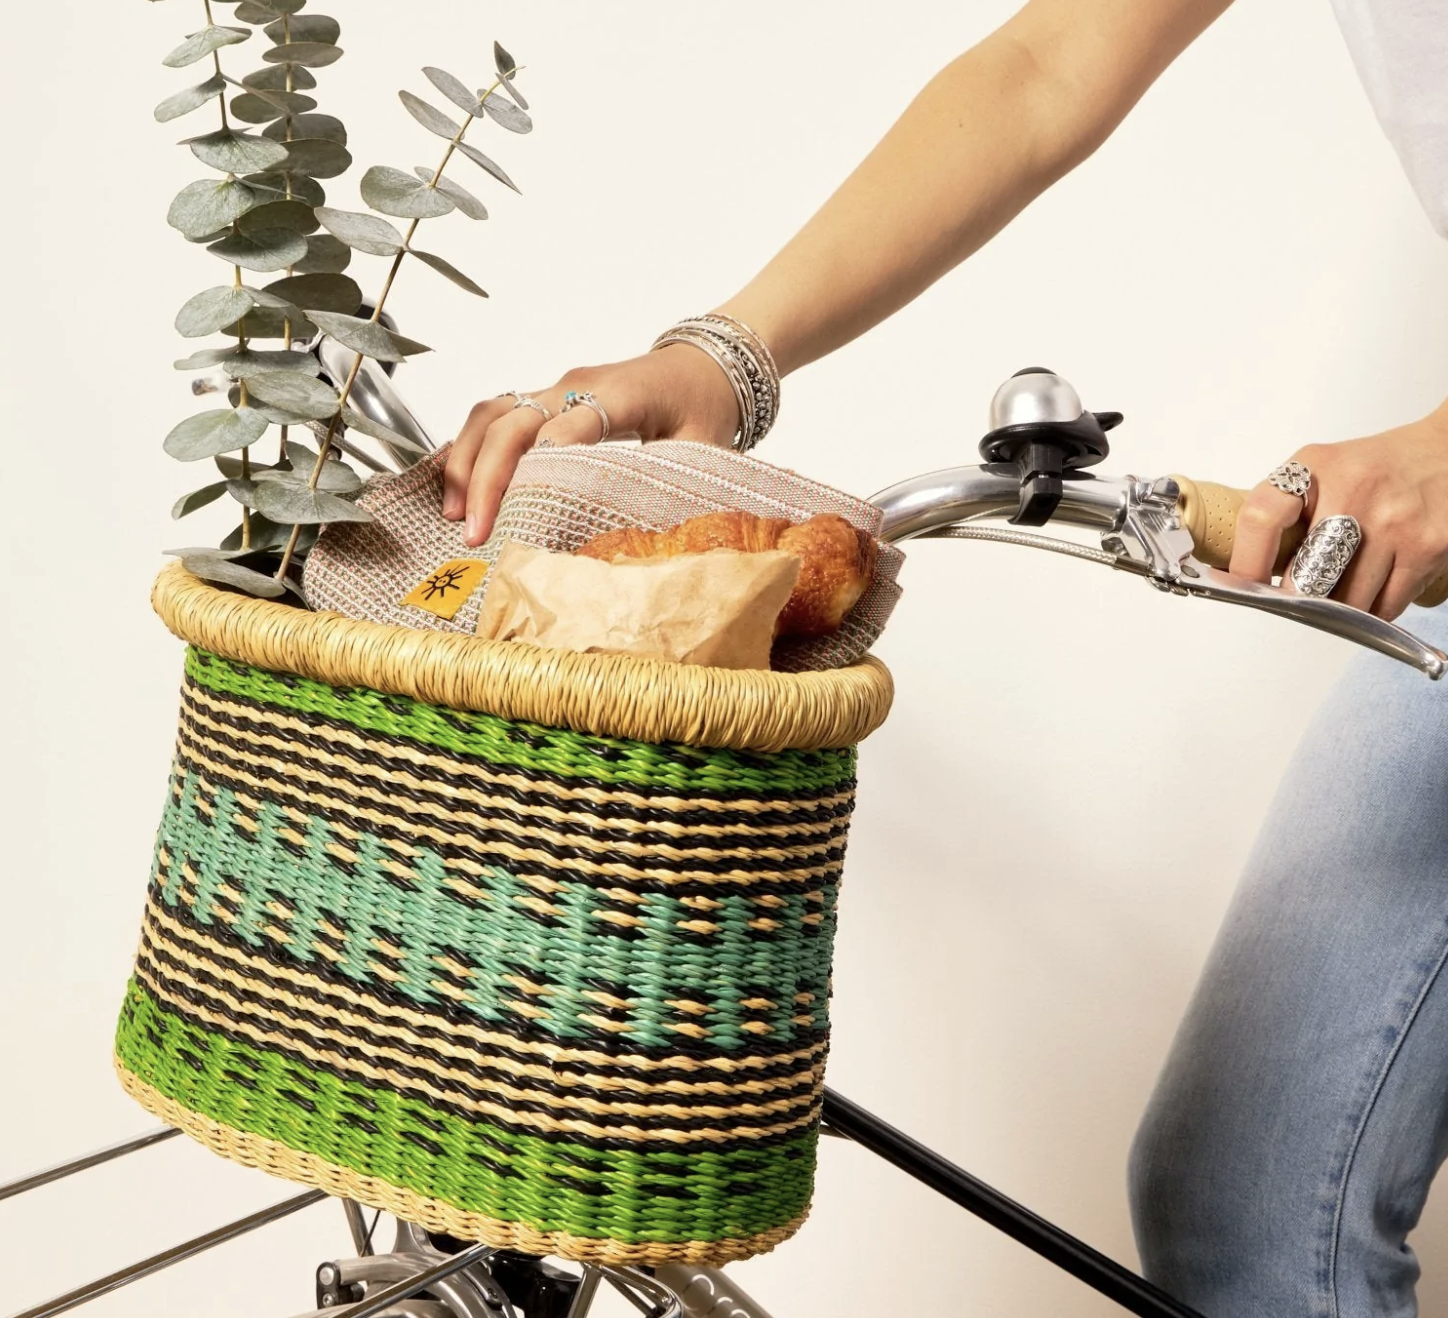 woven basket on bike handlebars